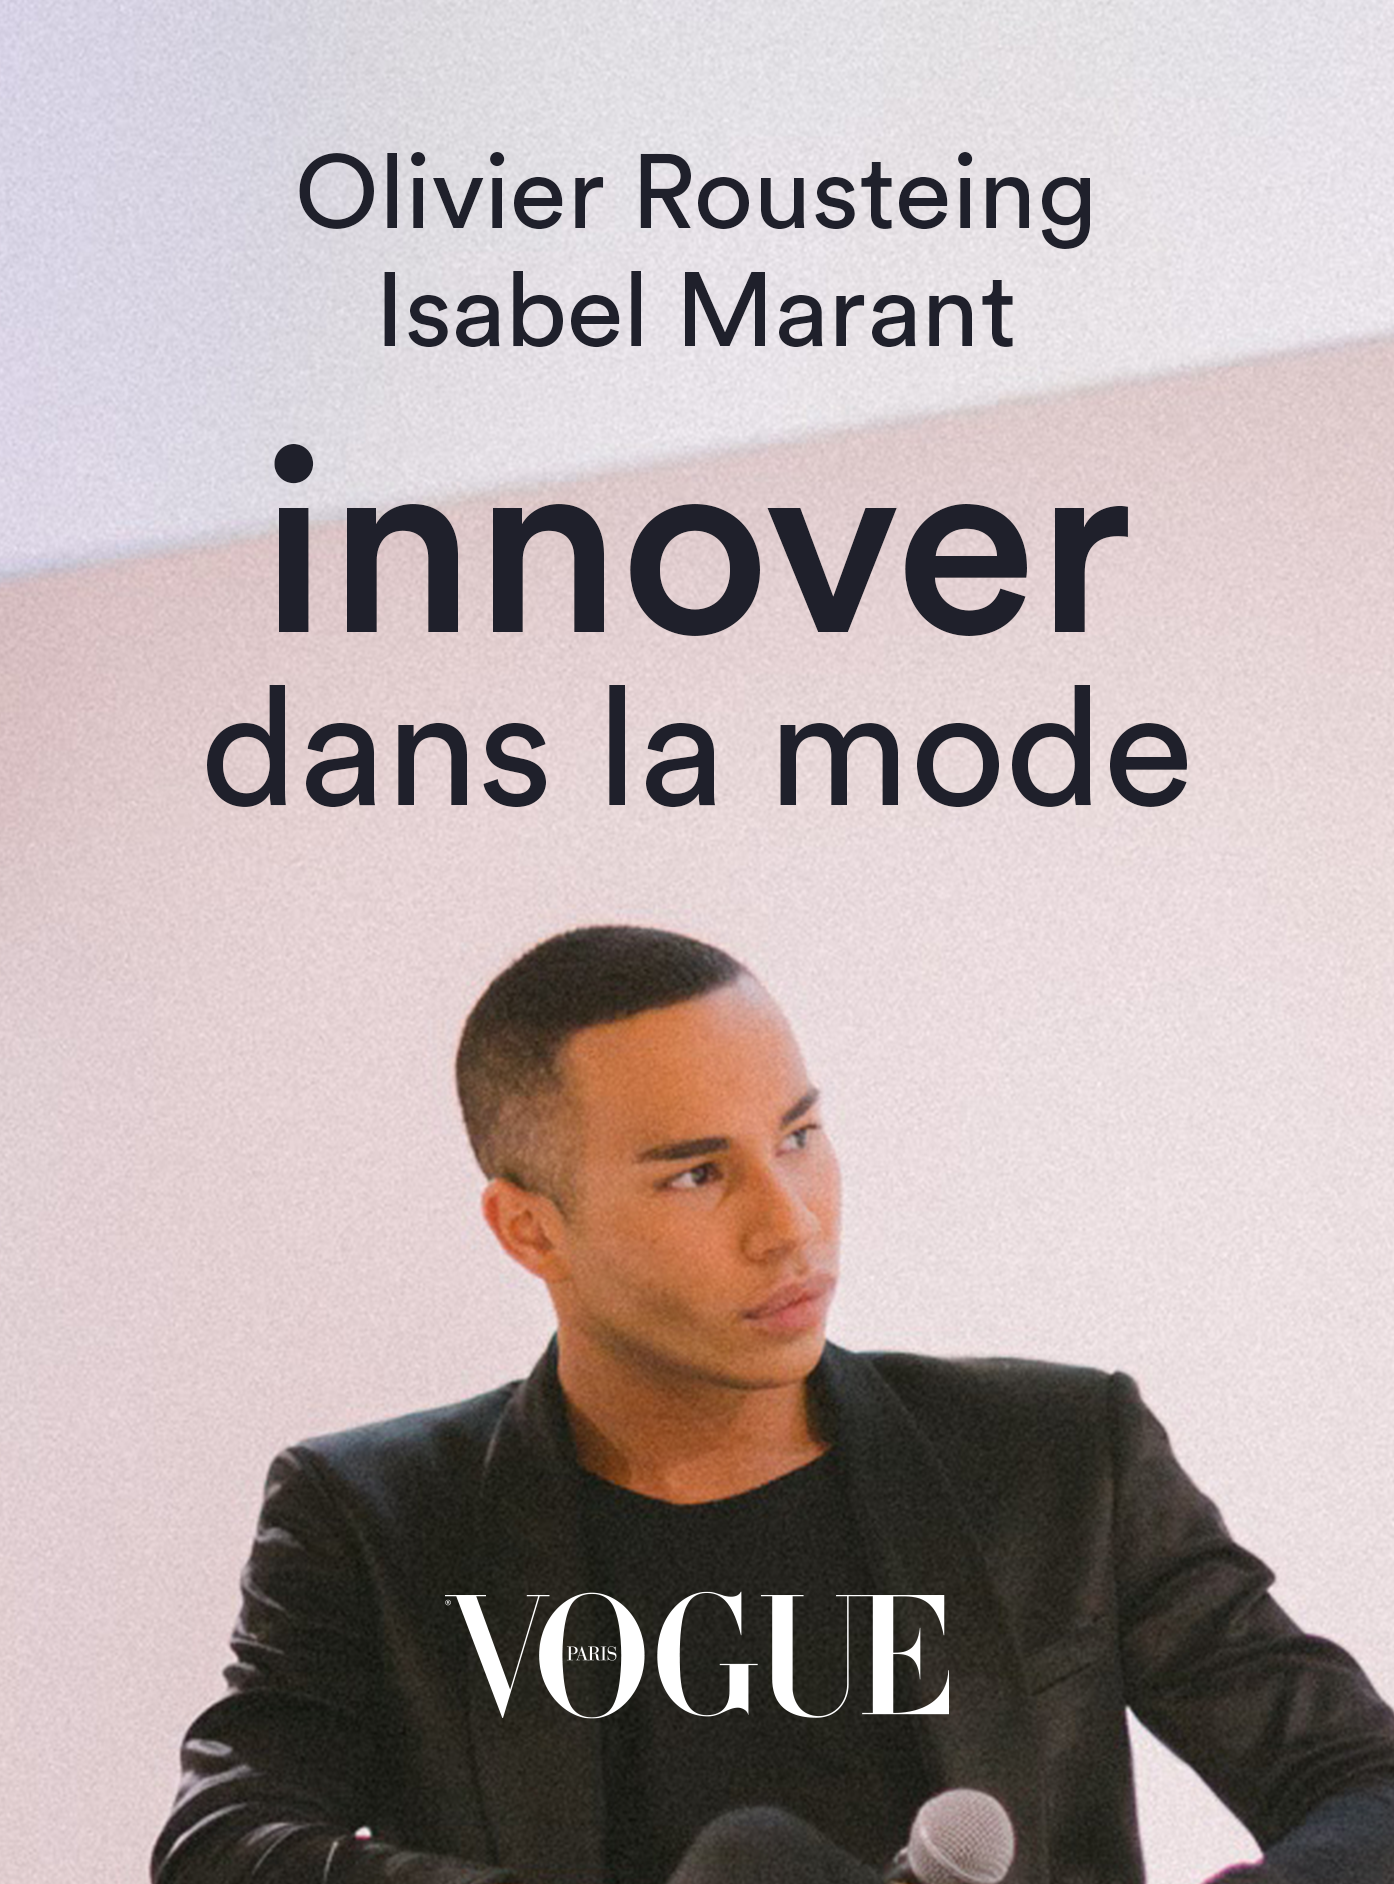 Isabel Marant et Olivier Rousteing : innover dans la mode